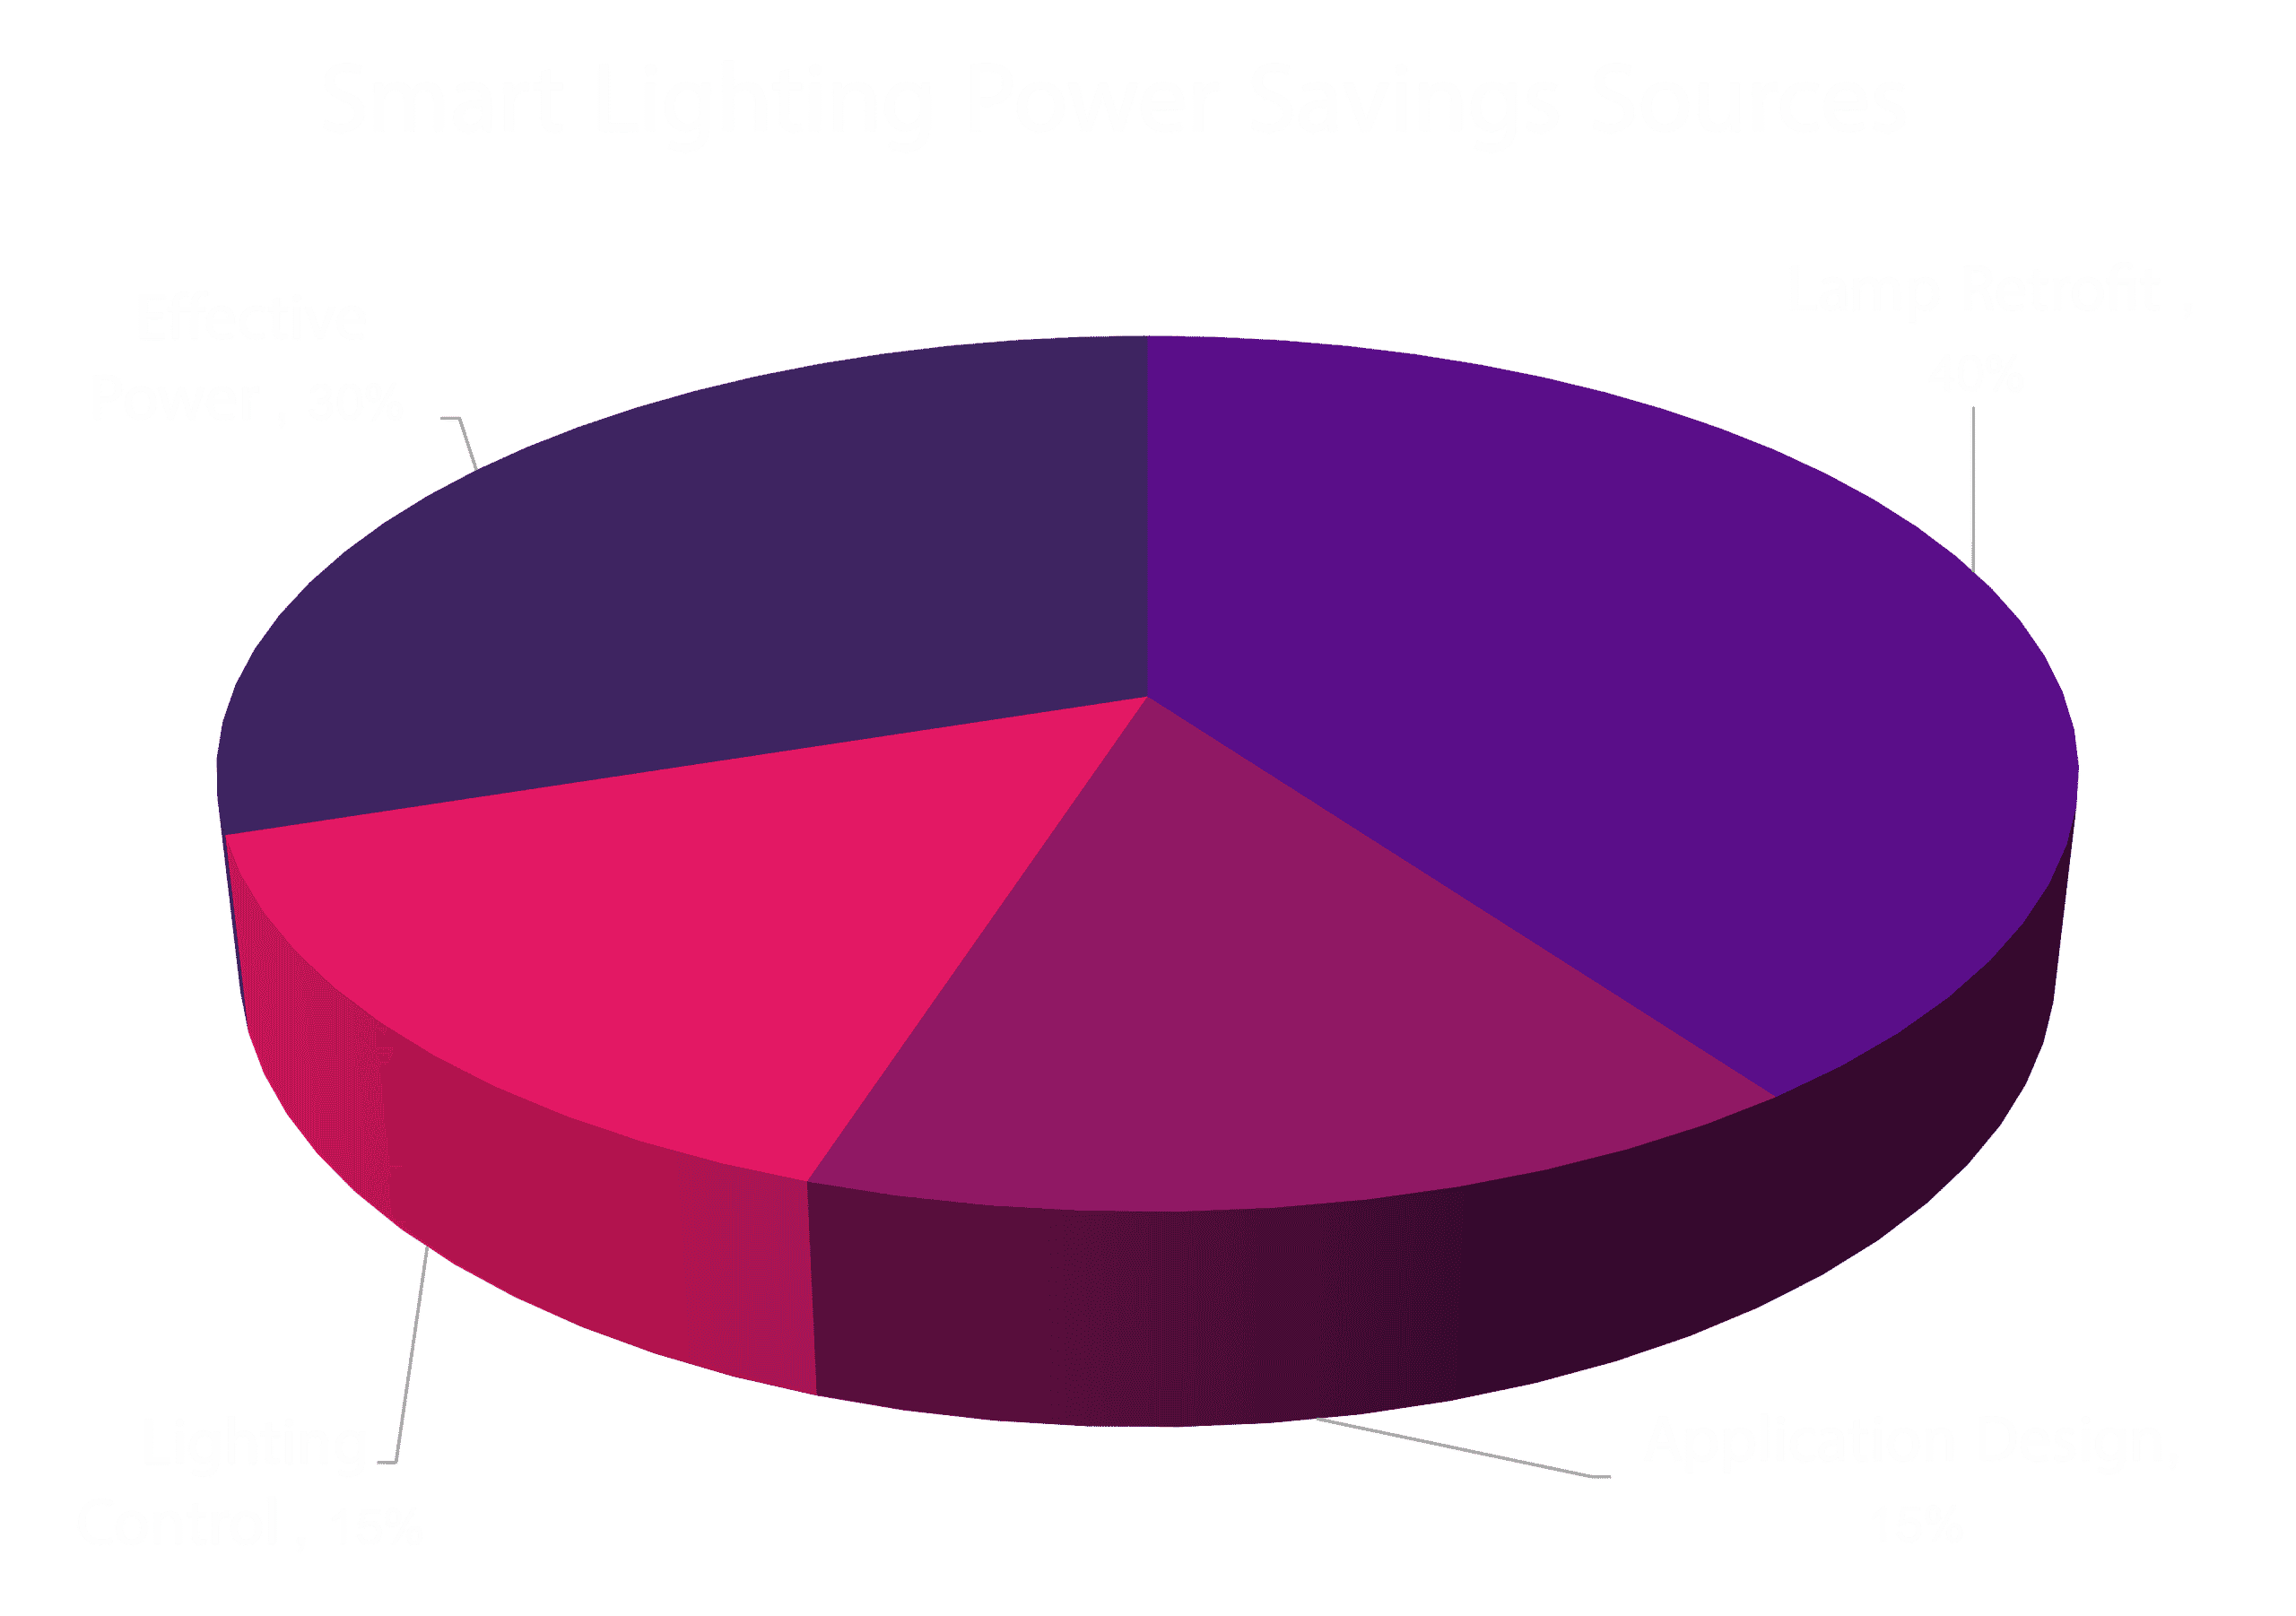 Image of Smart Lighting Power Savings Sources Pie Chart